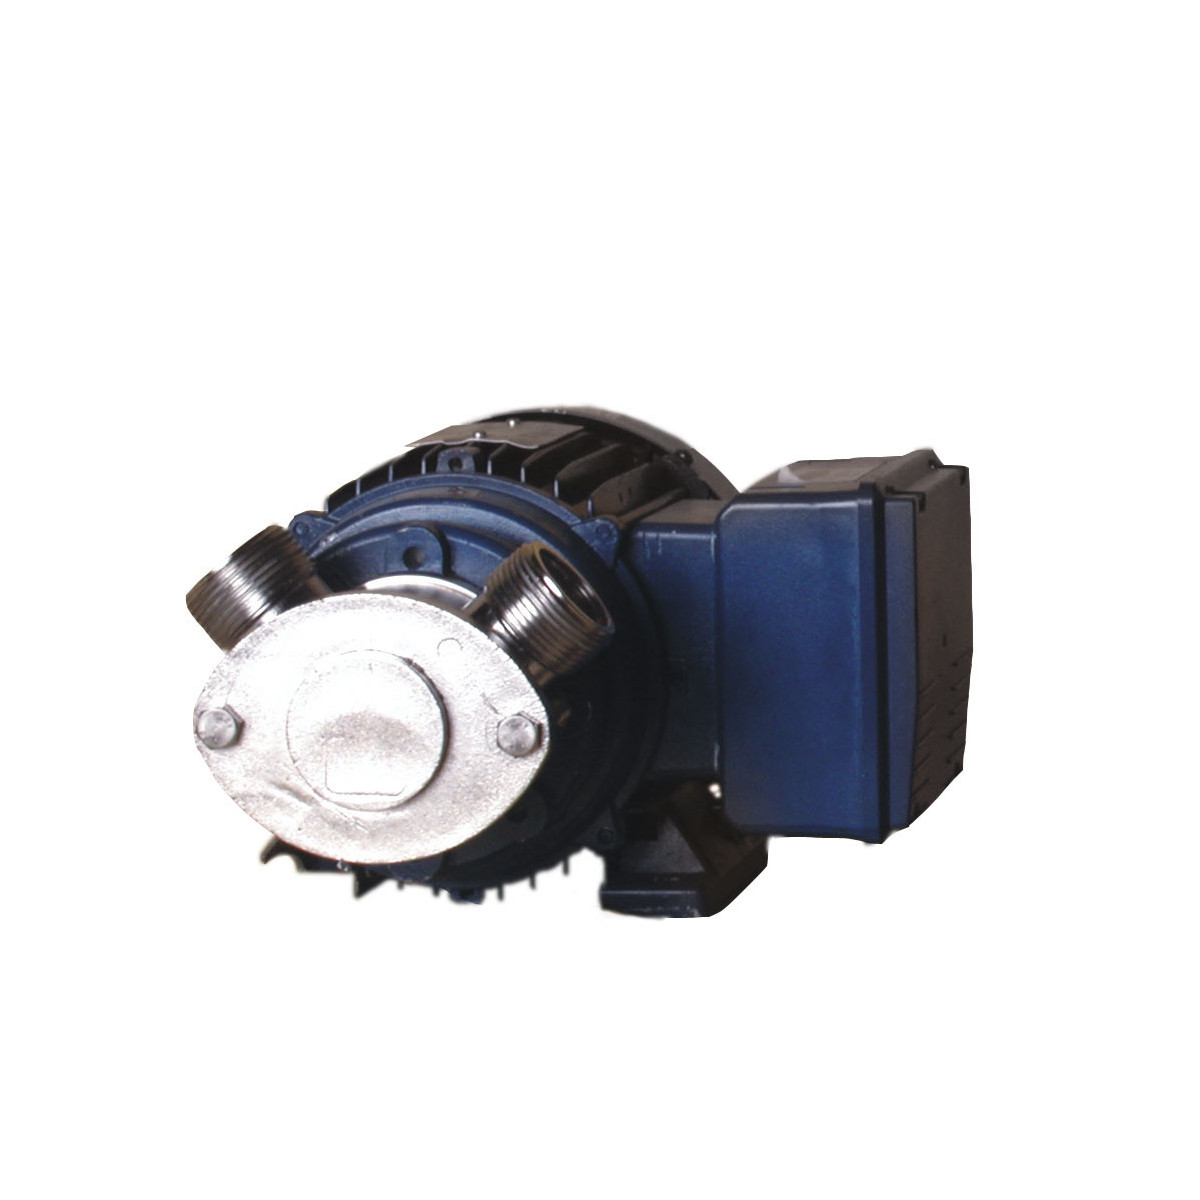 impeller pump MIDEX 5/4" stainless steel 900 rpm